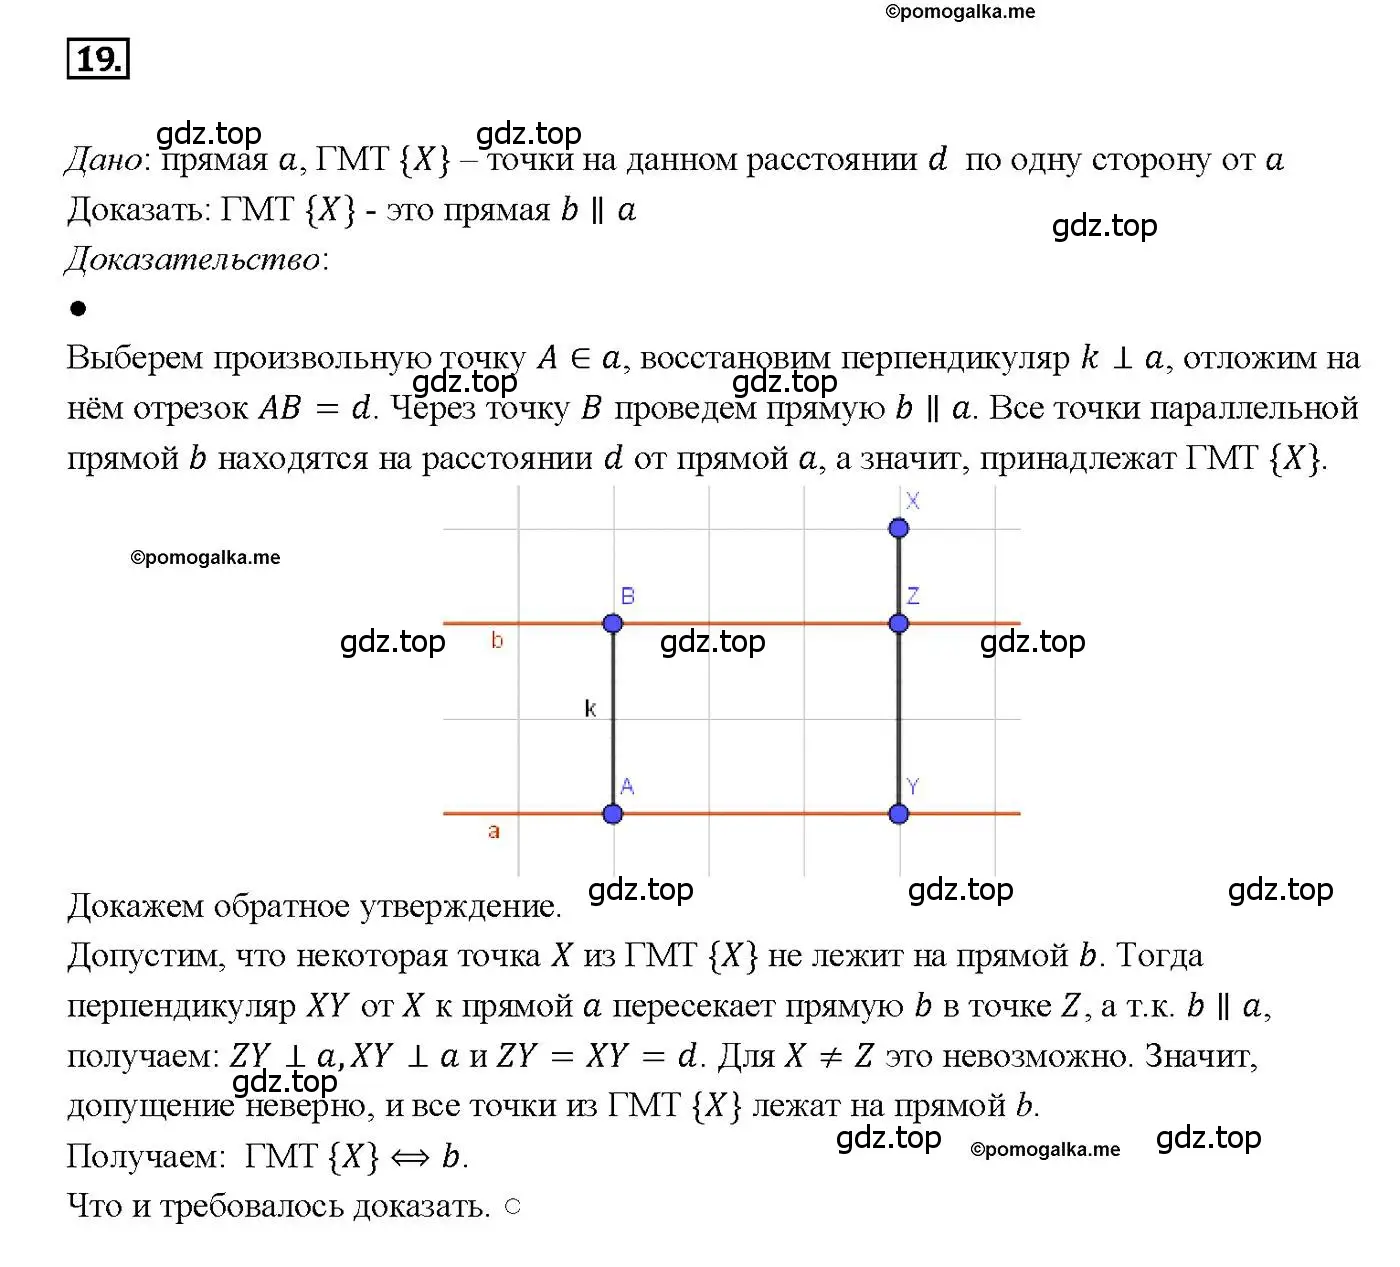 Решение 4. номер 19 (страница 89) гдз по геометрии 7-9 класс Атанасян, Бутузов, учебник